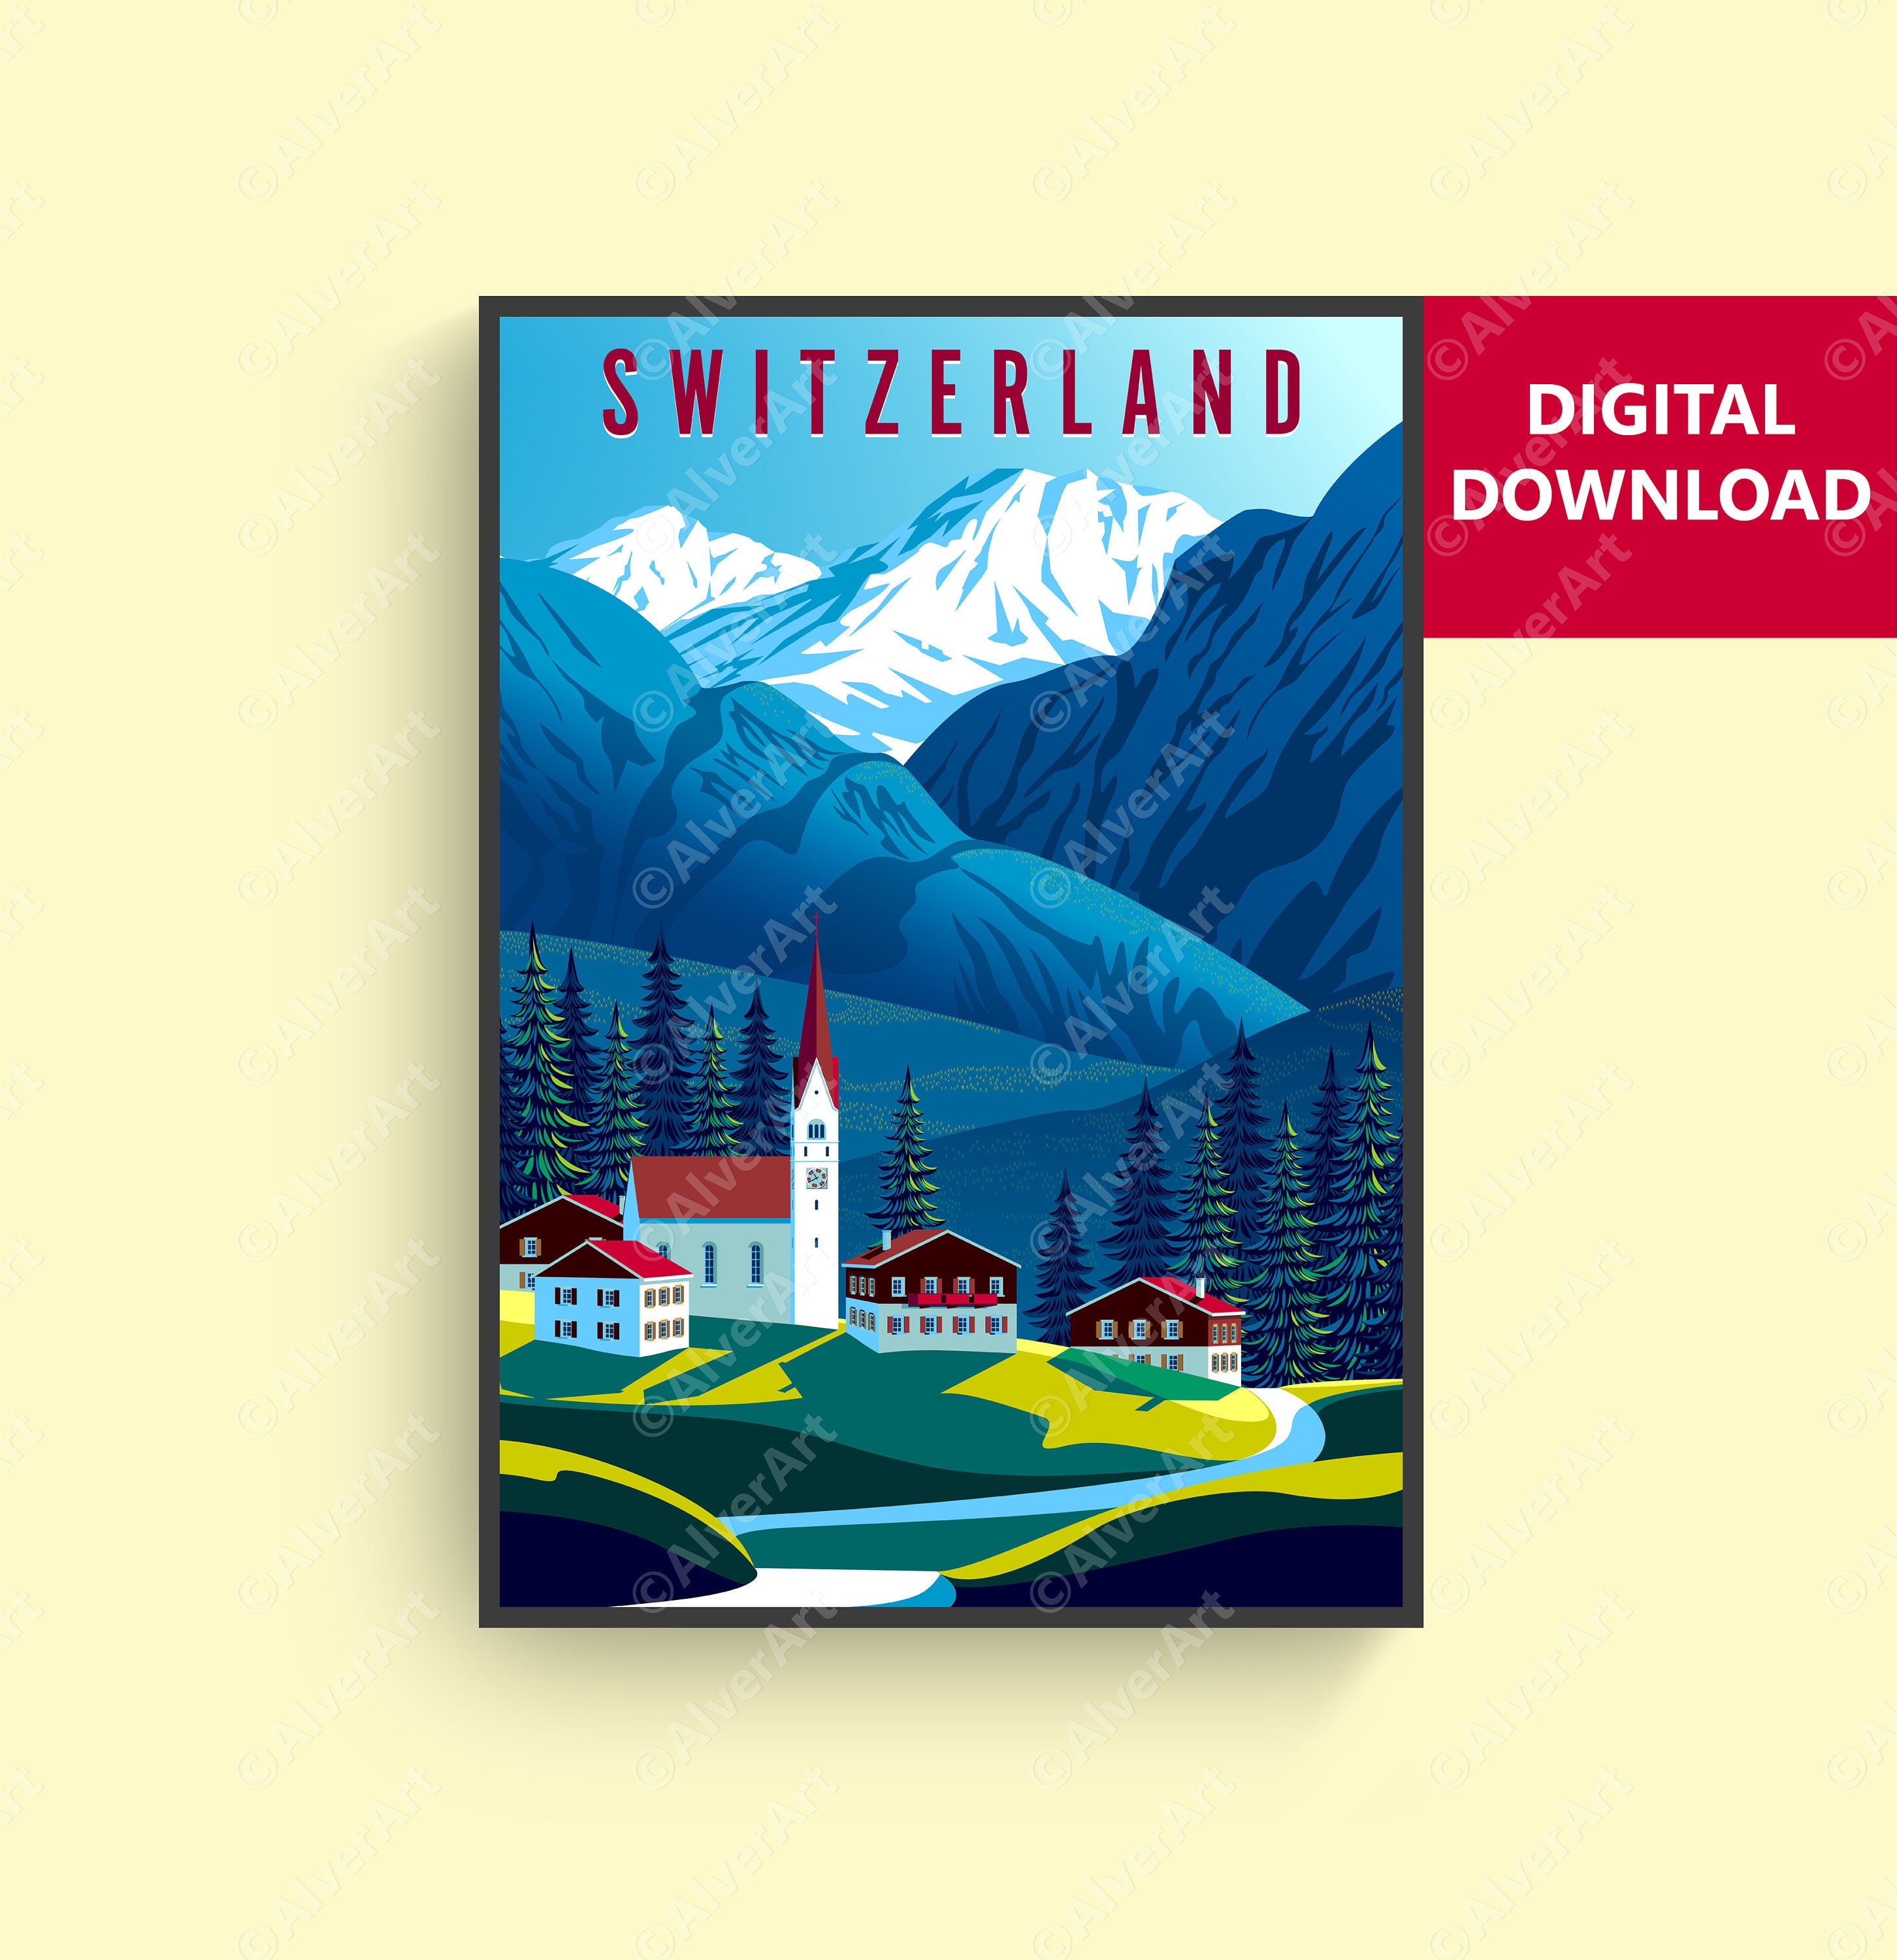 Швейцарские плакаты. Швейцария плакат. Швейцарский стиль плакаты. Плакат швея. Плакаты в швейцарском стиле детские.